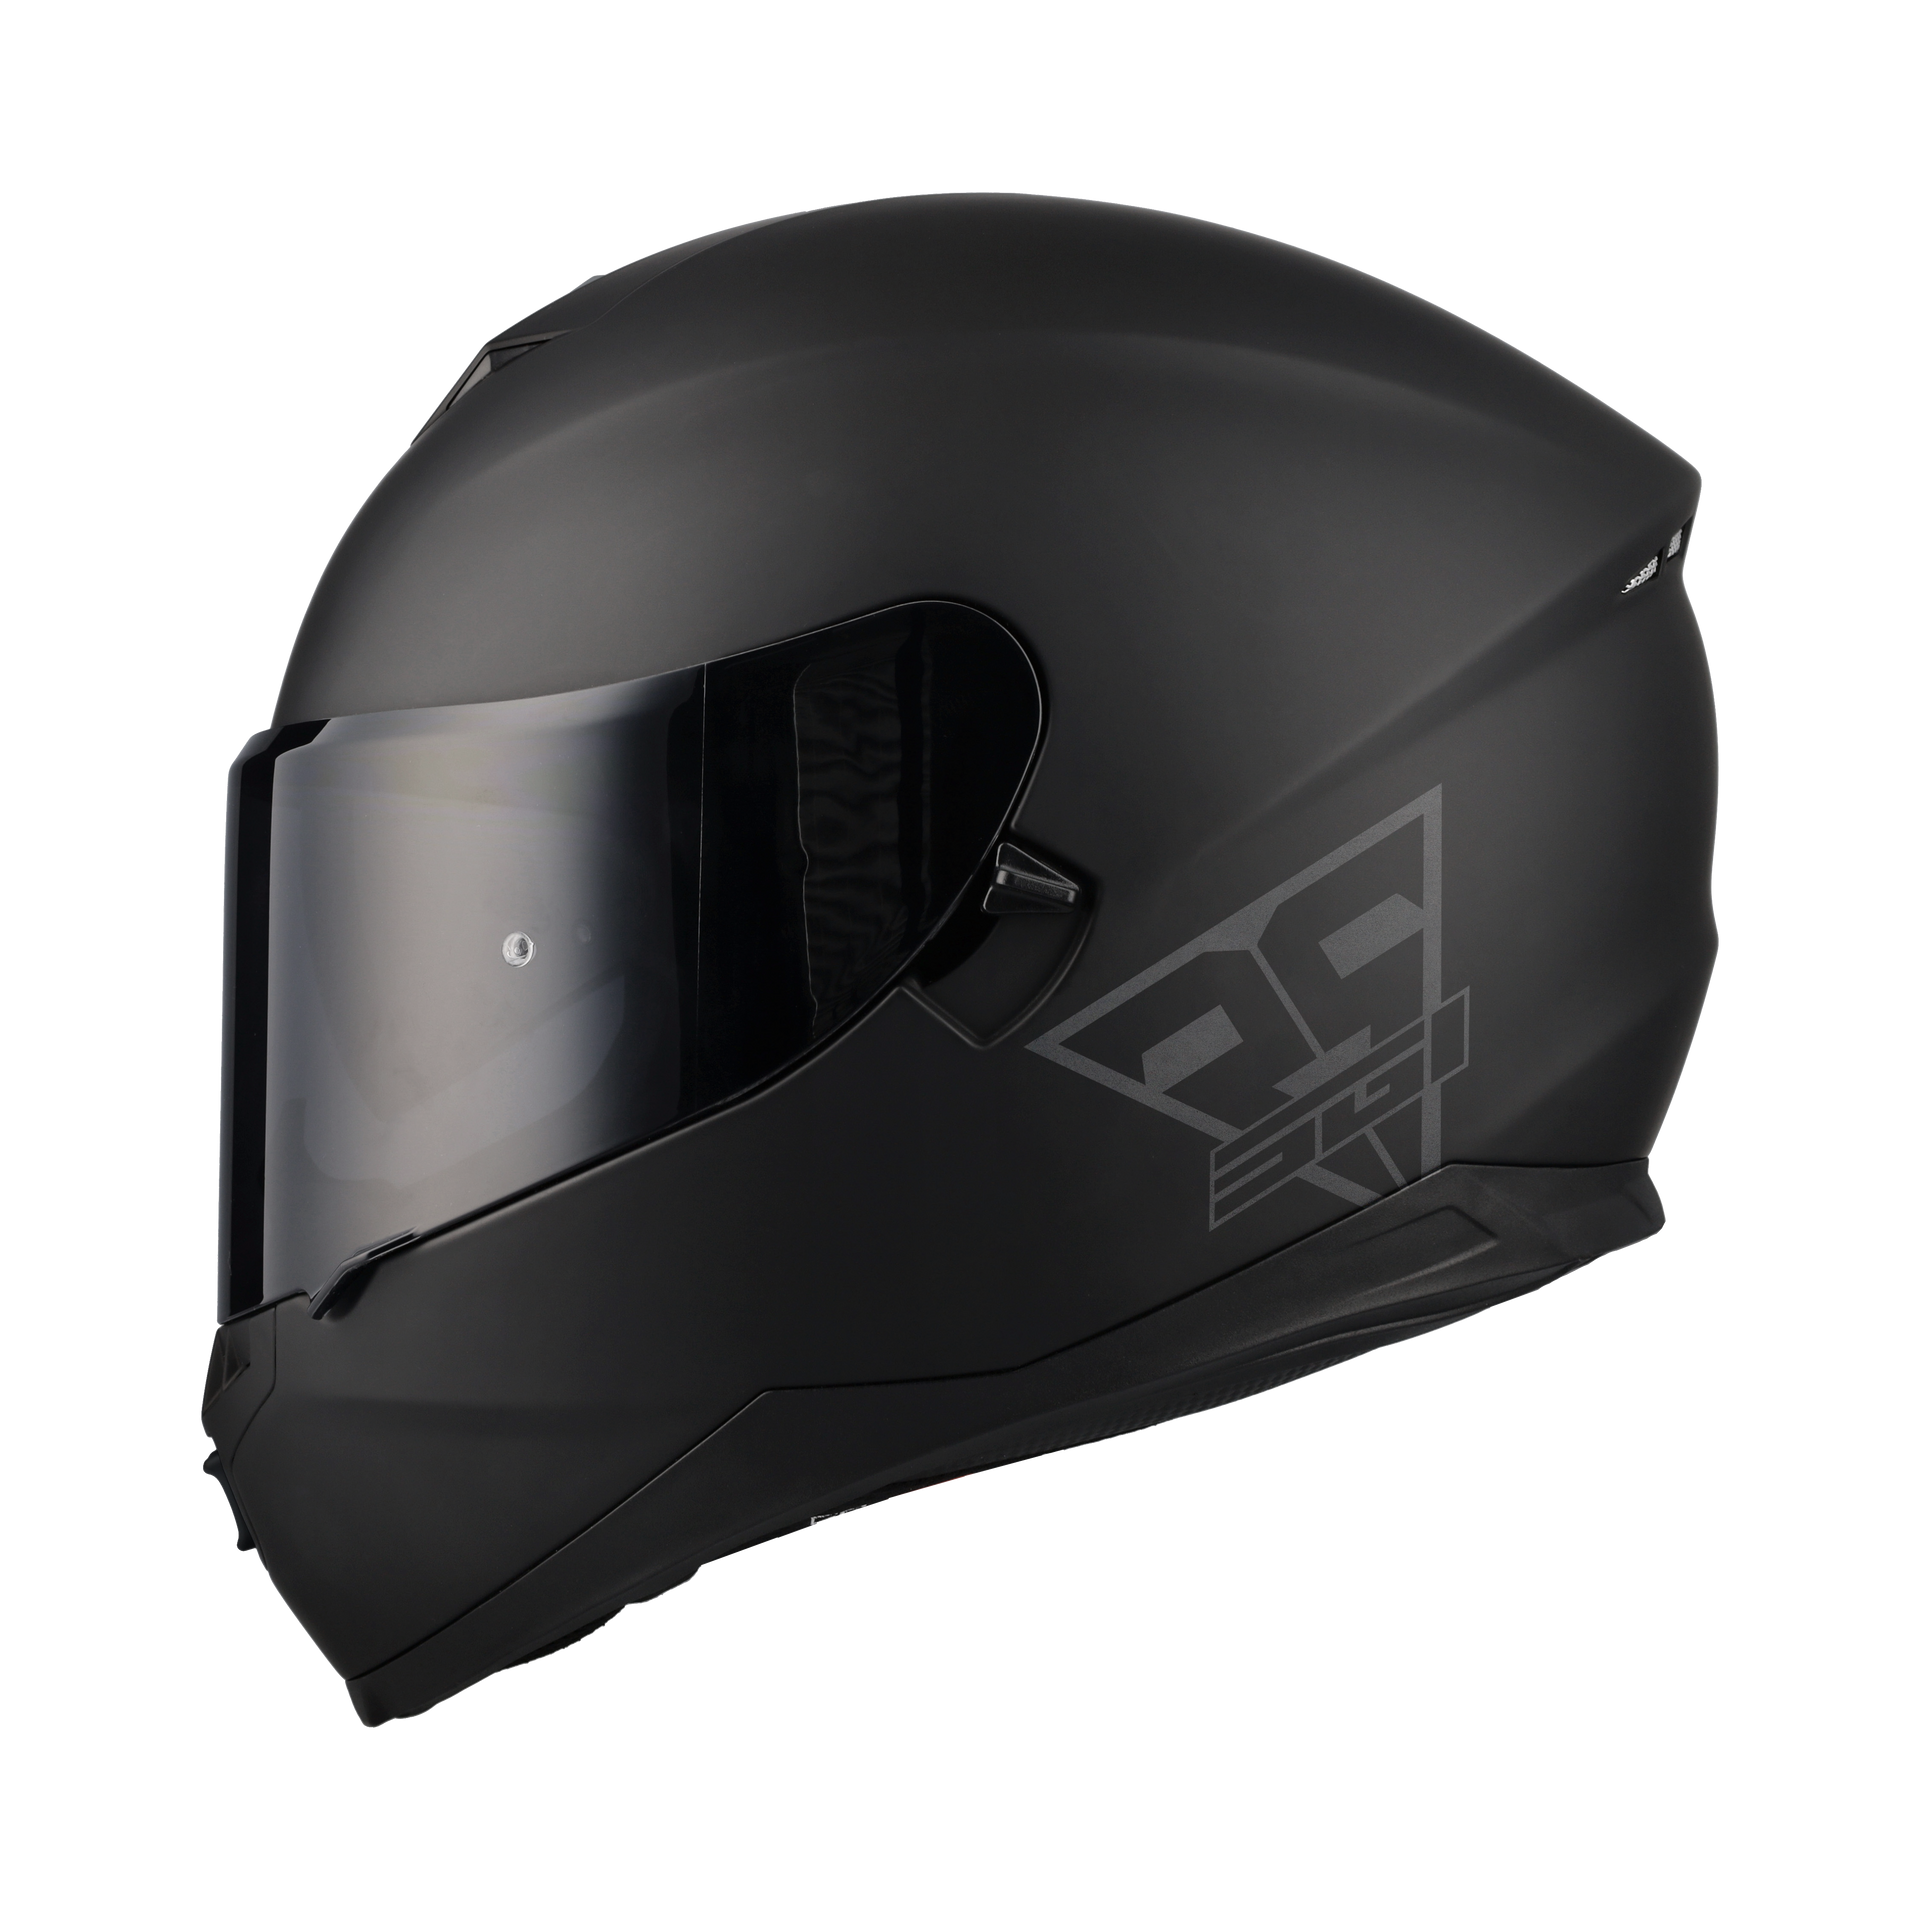 SGI - Encounter Helmet